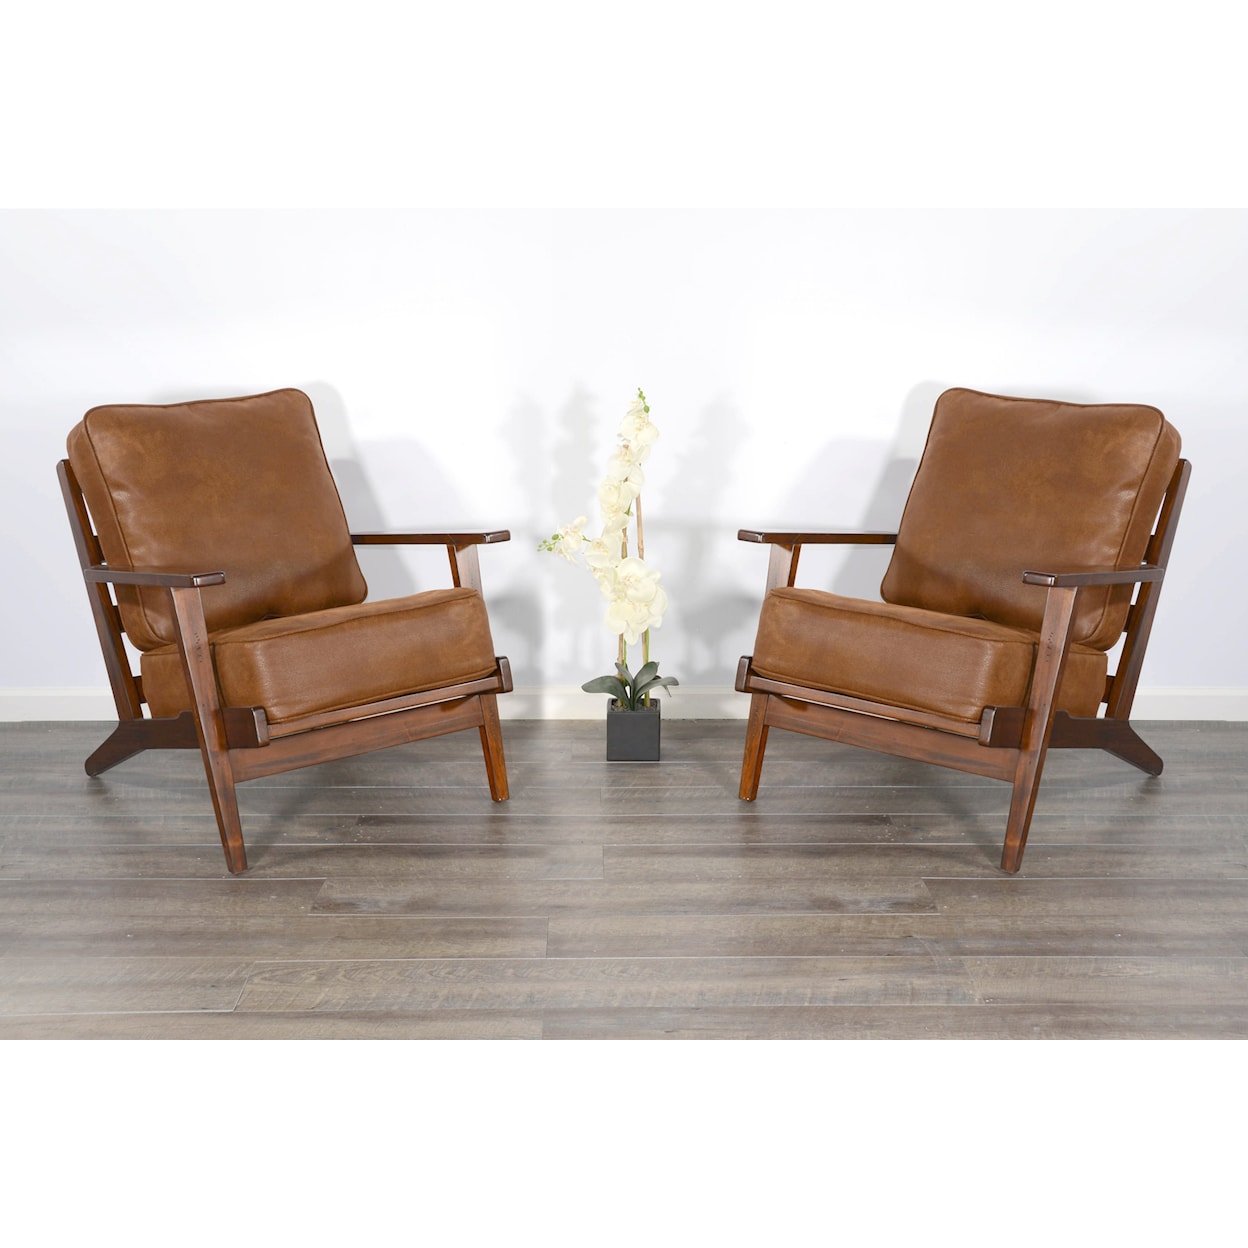 Sunny Designs Santa Fe. Dark Chocolate Chair with Cushions